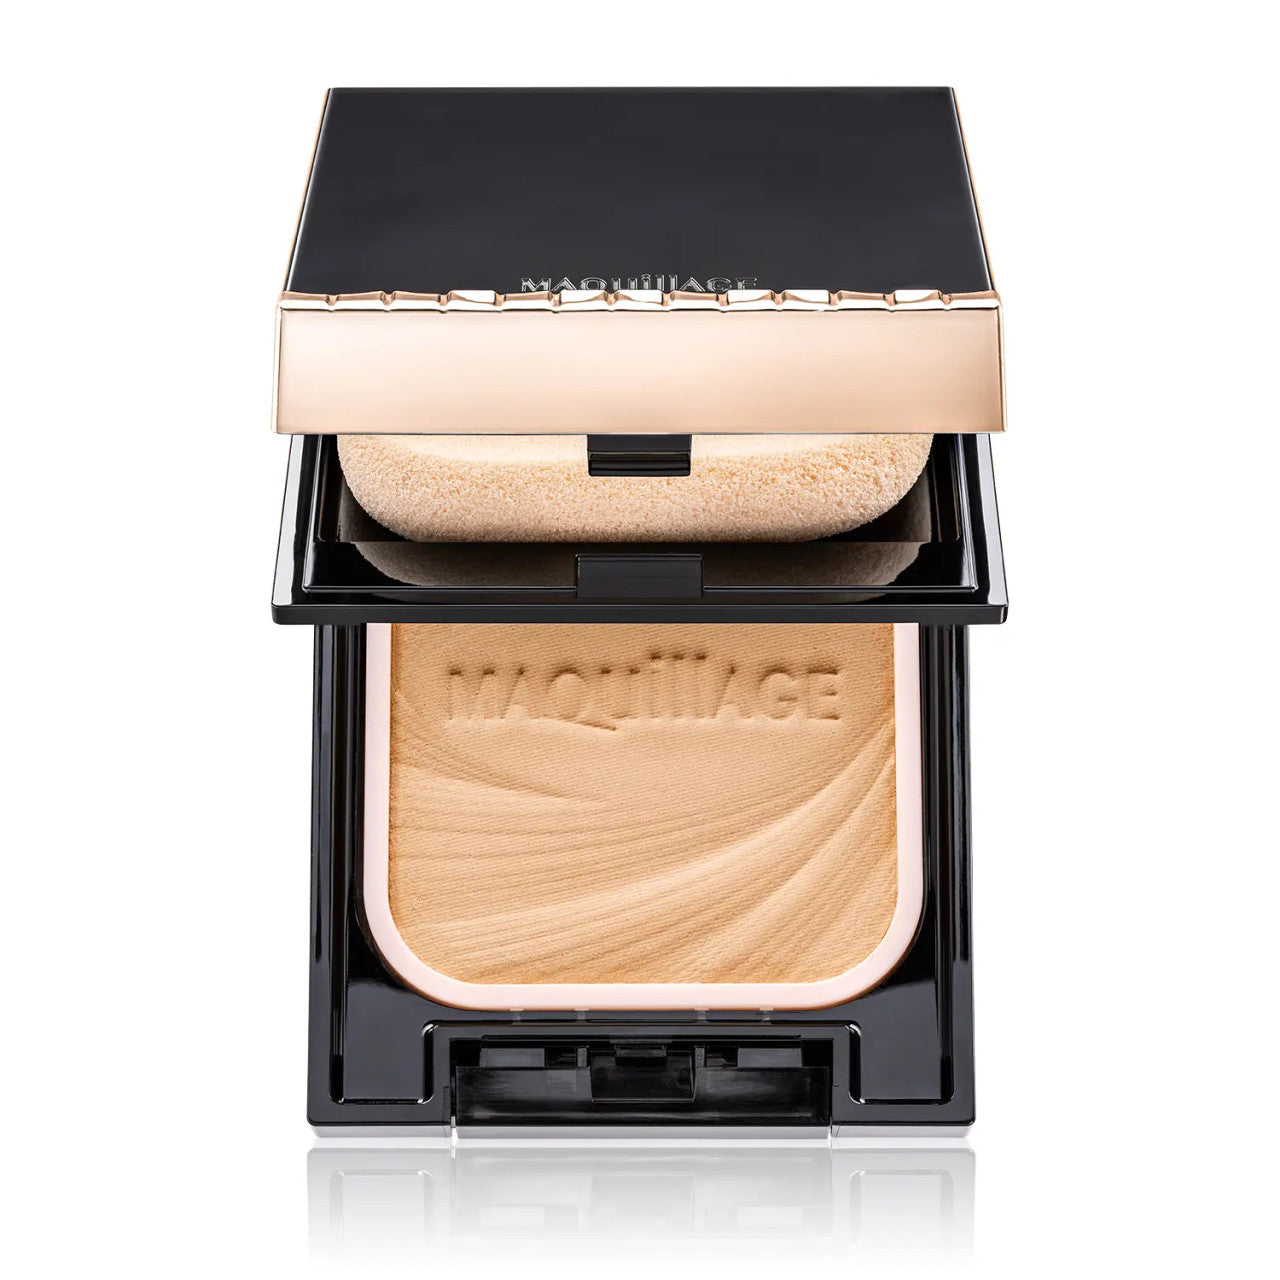 shiseido-maquillage-dramatic-powder-ex-foundation-9-3g